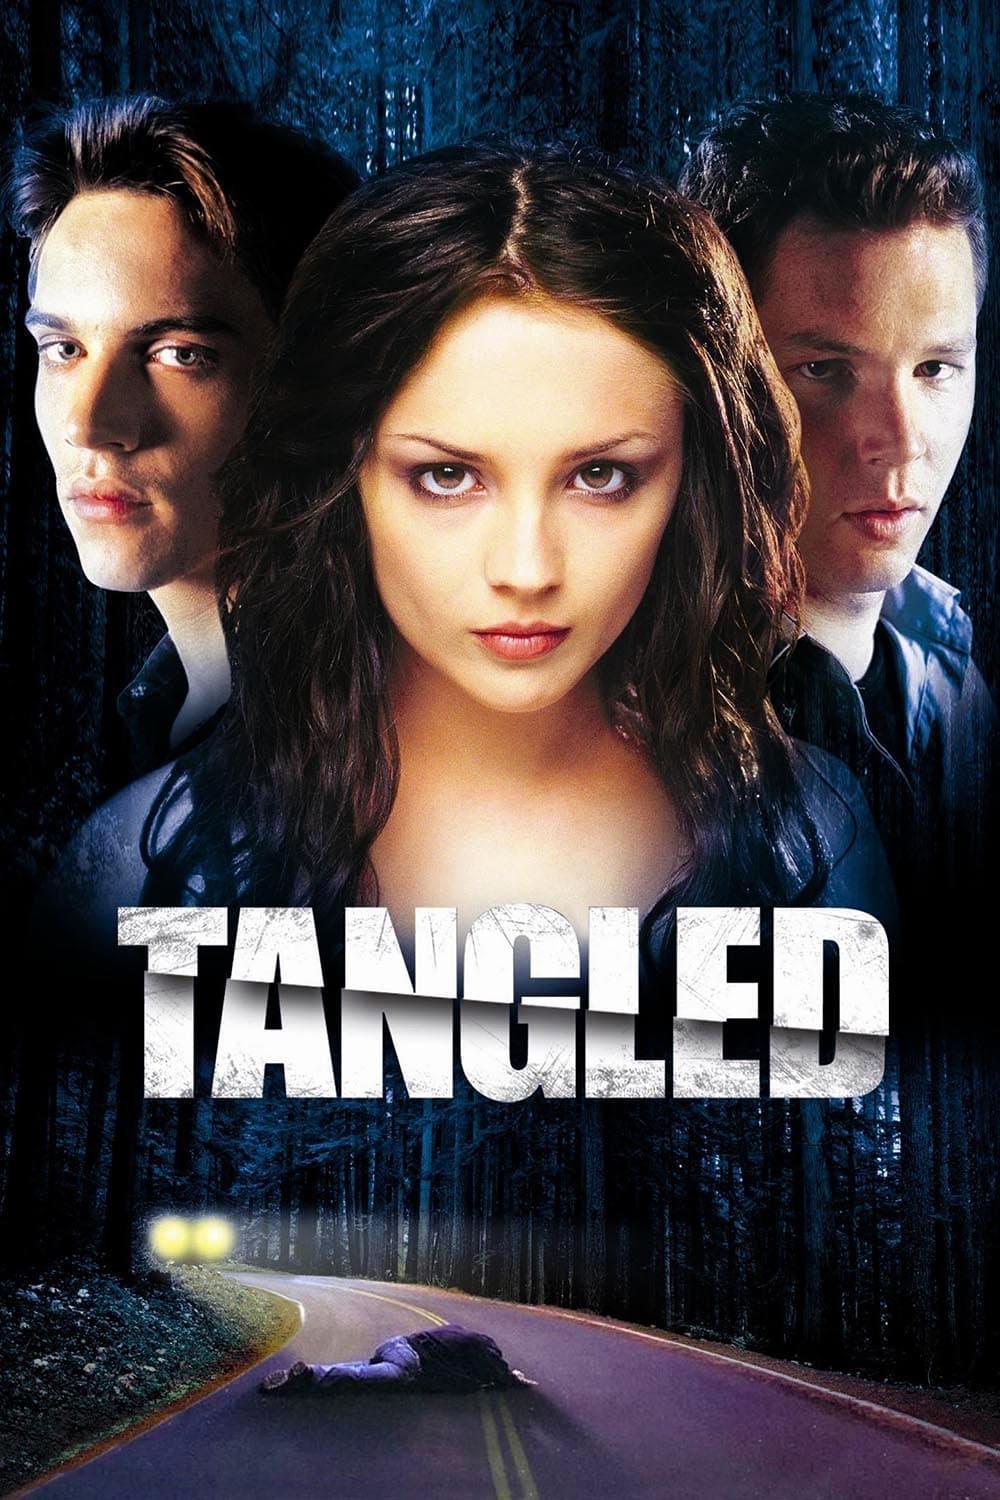 Tangled poster